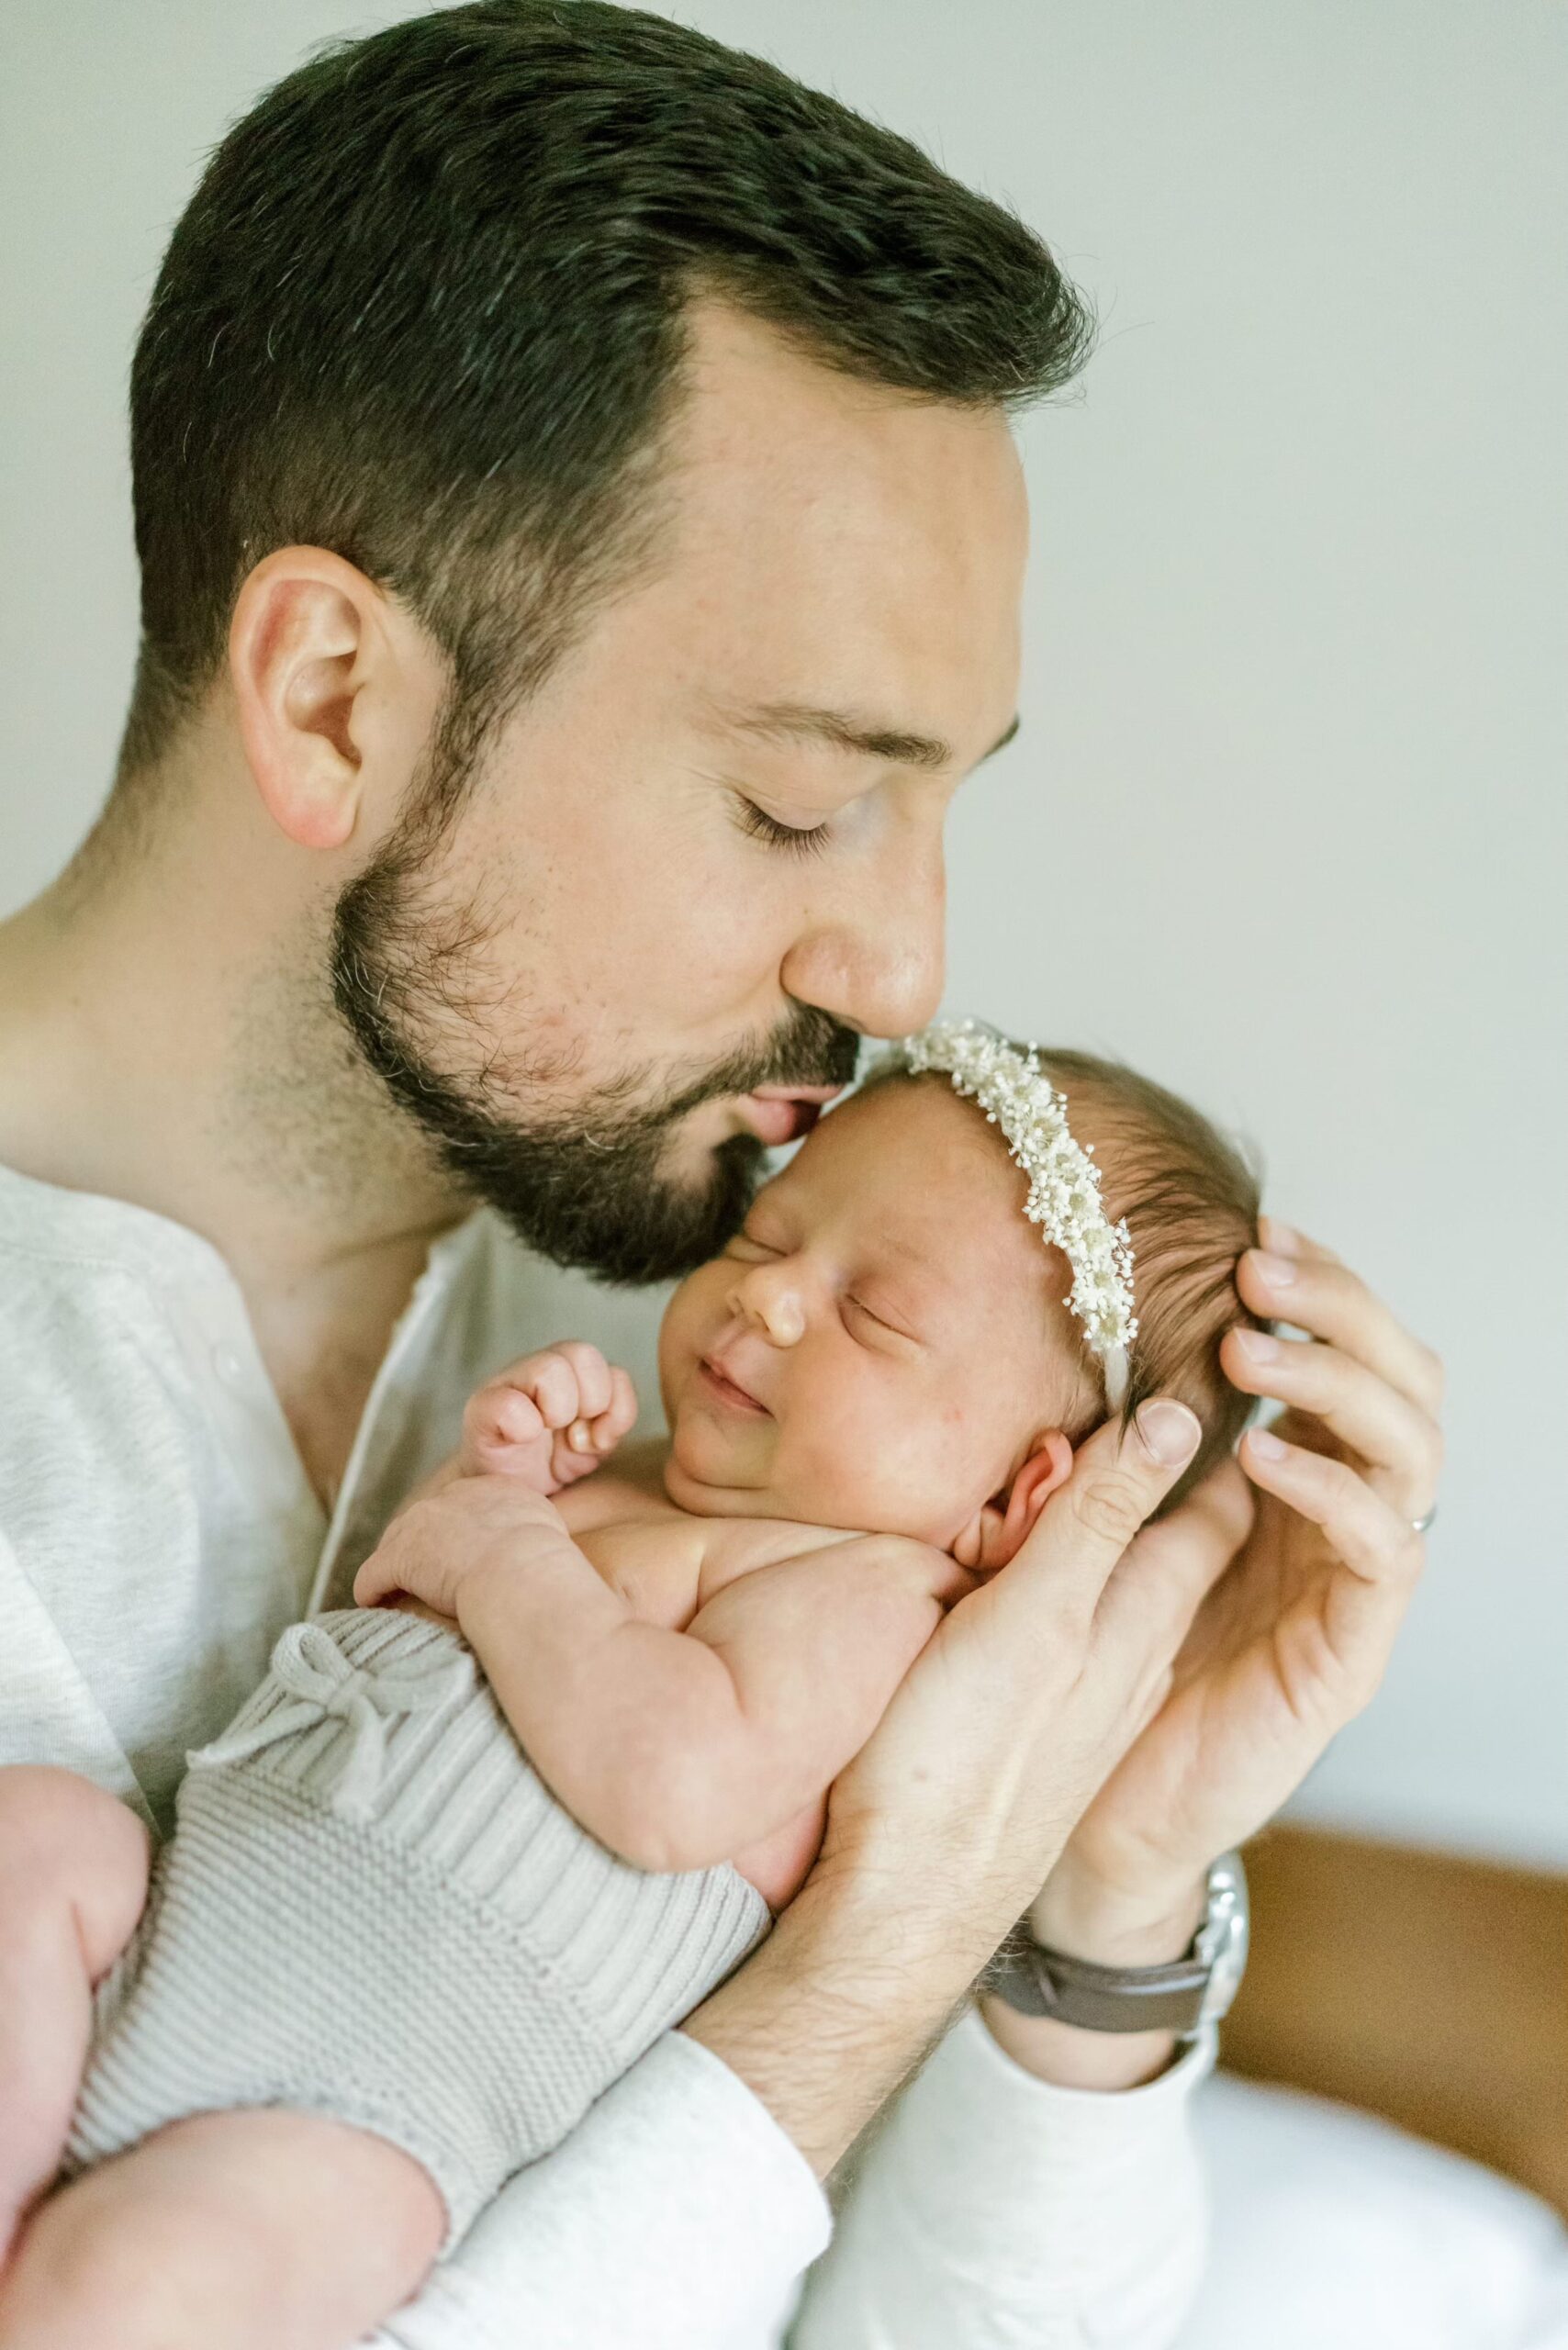 Dad kisses newborn baby's head